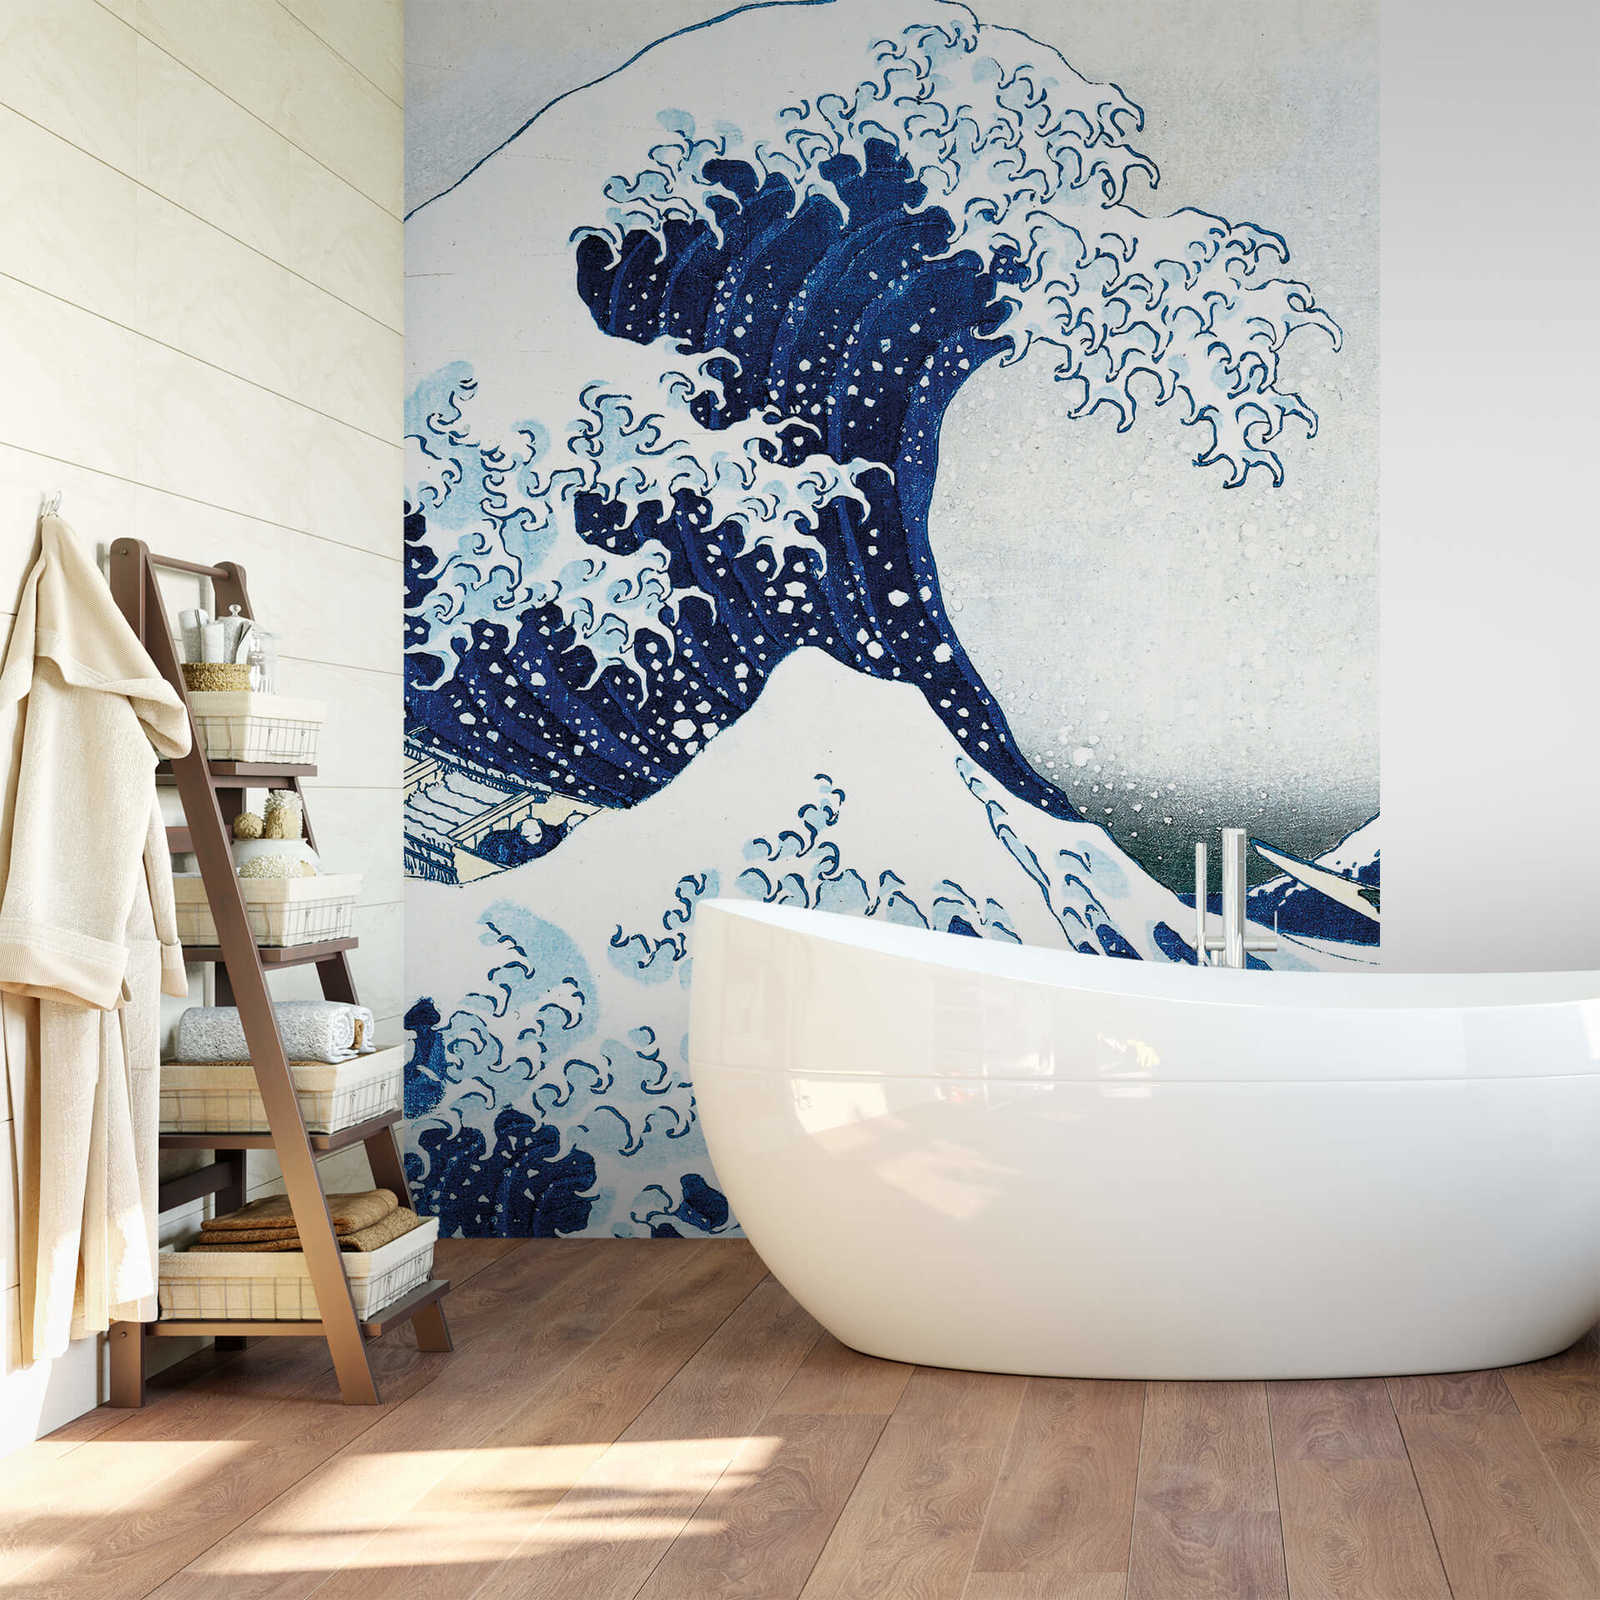             Photo wallpaper narrow wave drawn in blue - Blue, White
        